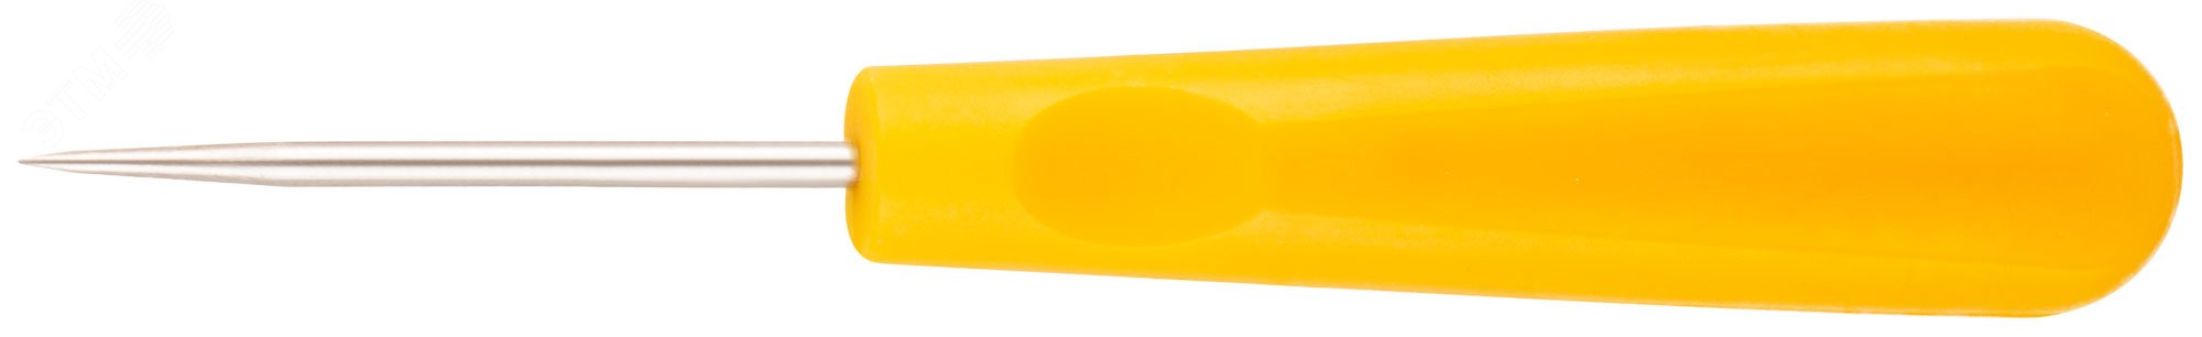 Шило, пластиковая ручка 52/140 x 3 мм 67409 FIT